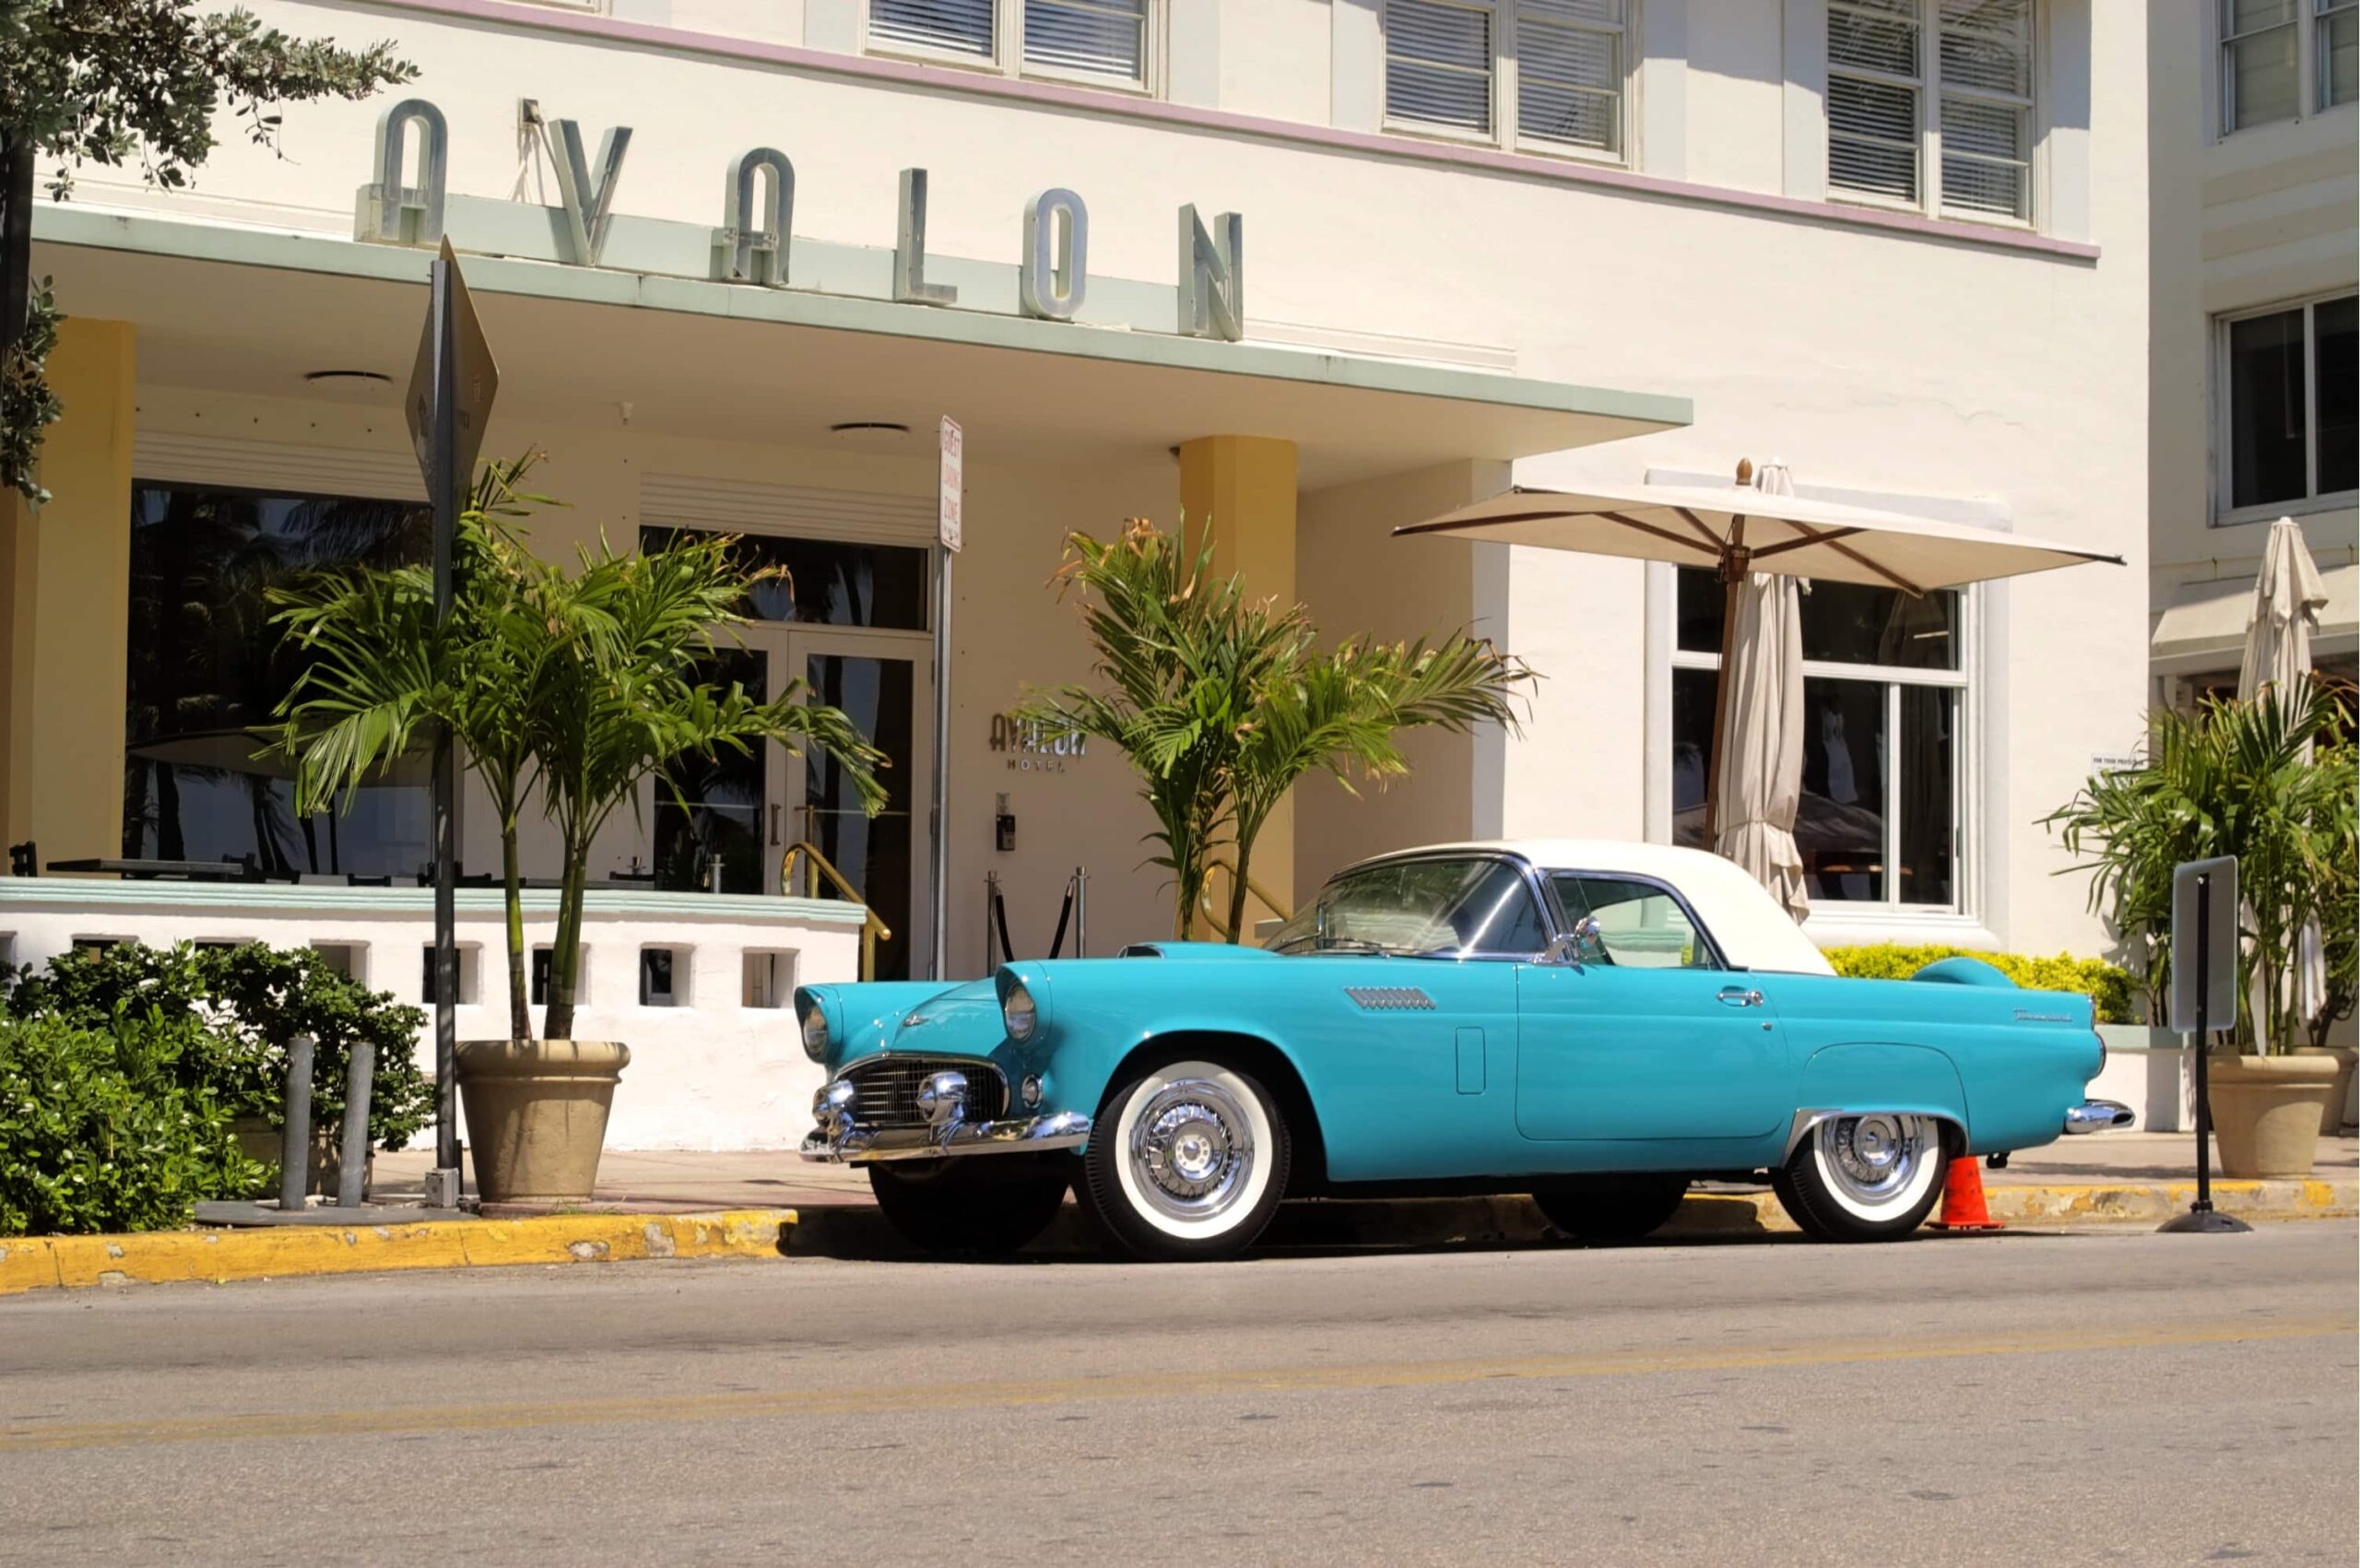 Vintage car in South Beach, Miami